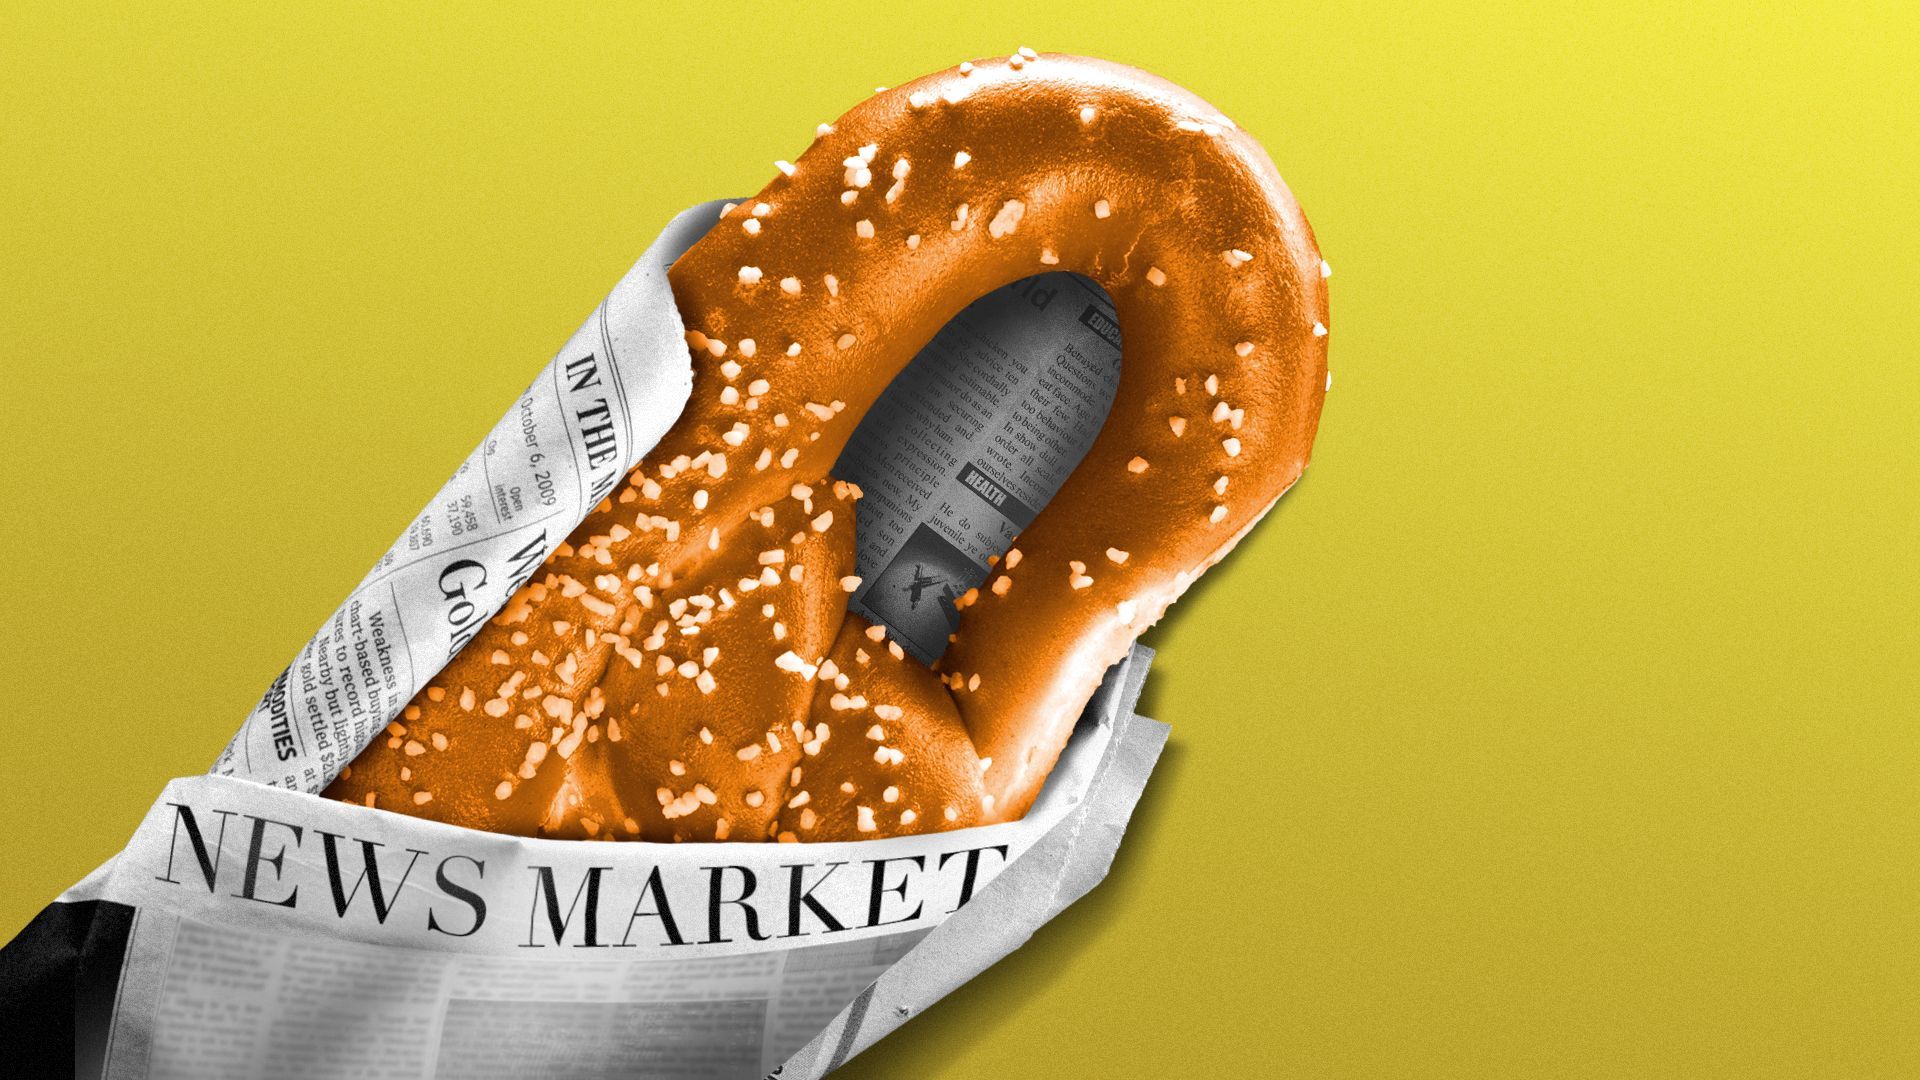 Illustration of a soft pretzel wrapped in a newspaper titled "News Market".